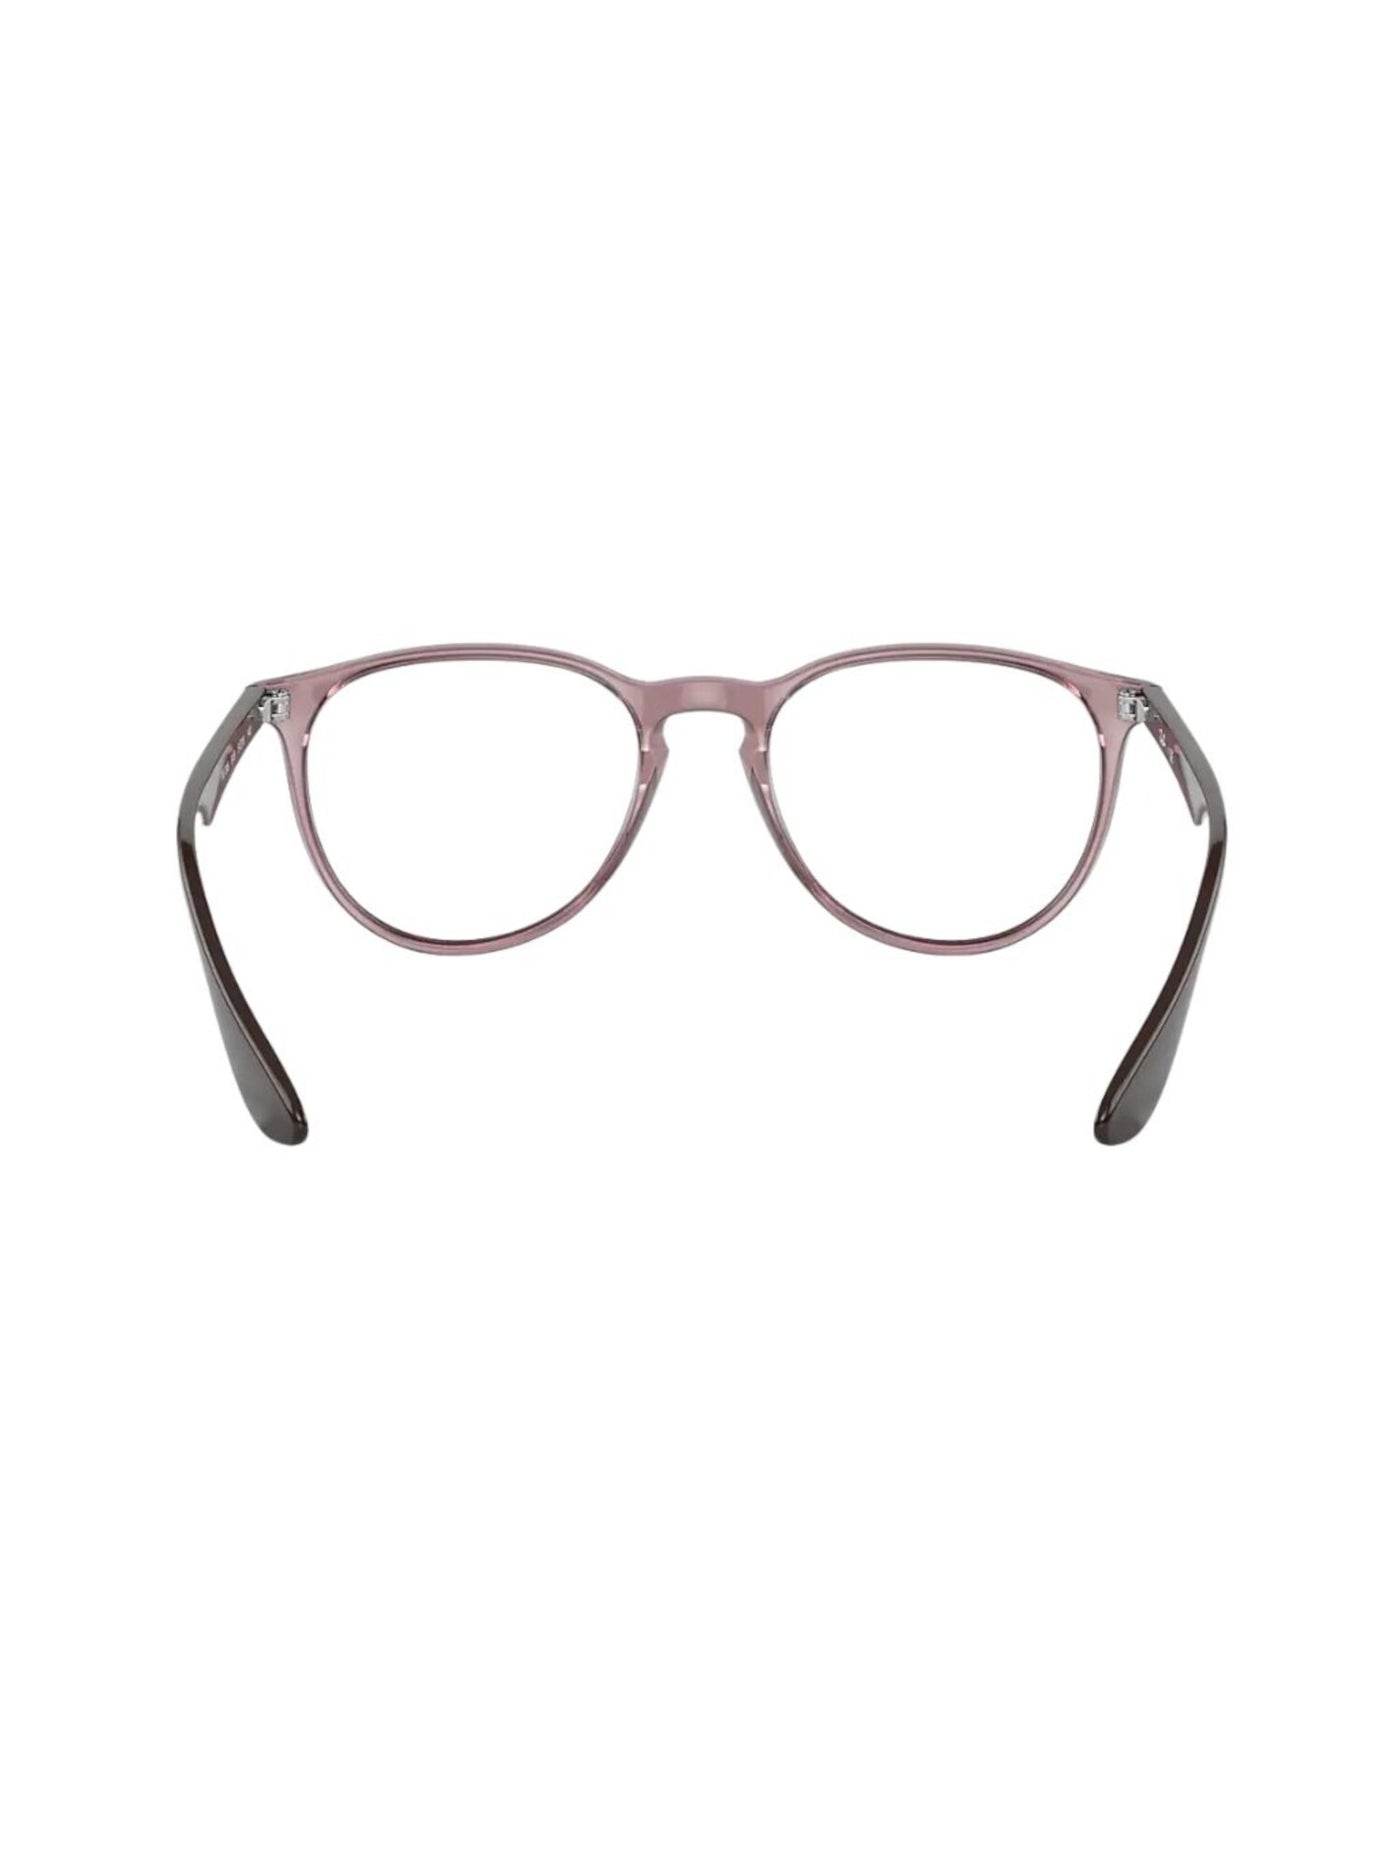 Ray-Ban RX7046 Erika Customizable Transparent Violet 51-18-140 Phantos Full Rim Unisex Eyeglasses Frames With Case and Cloth